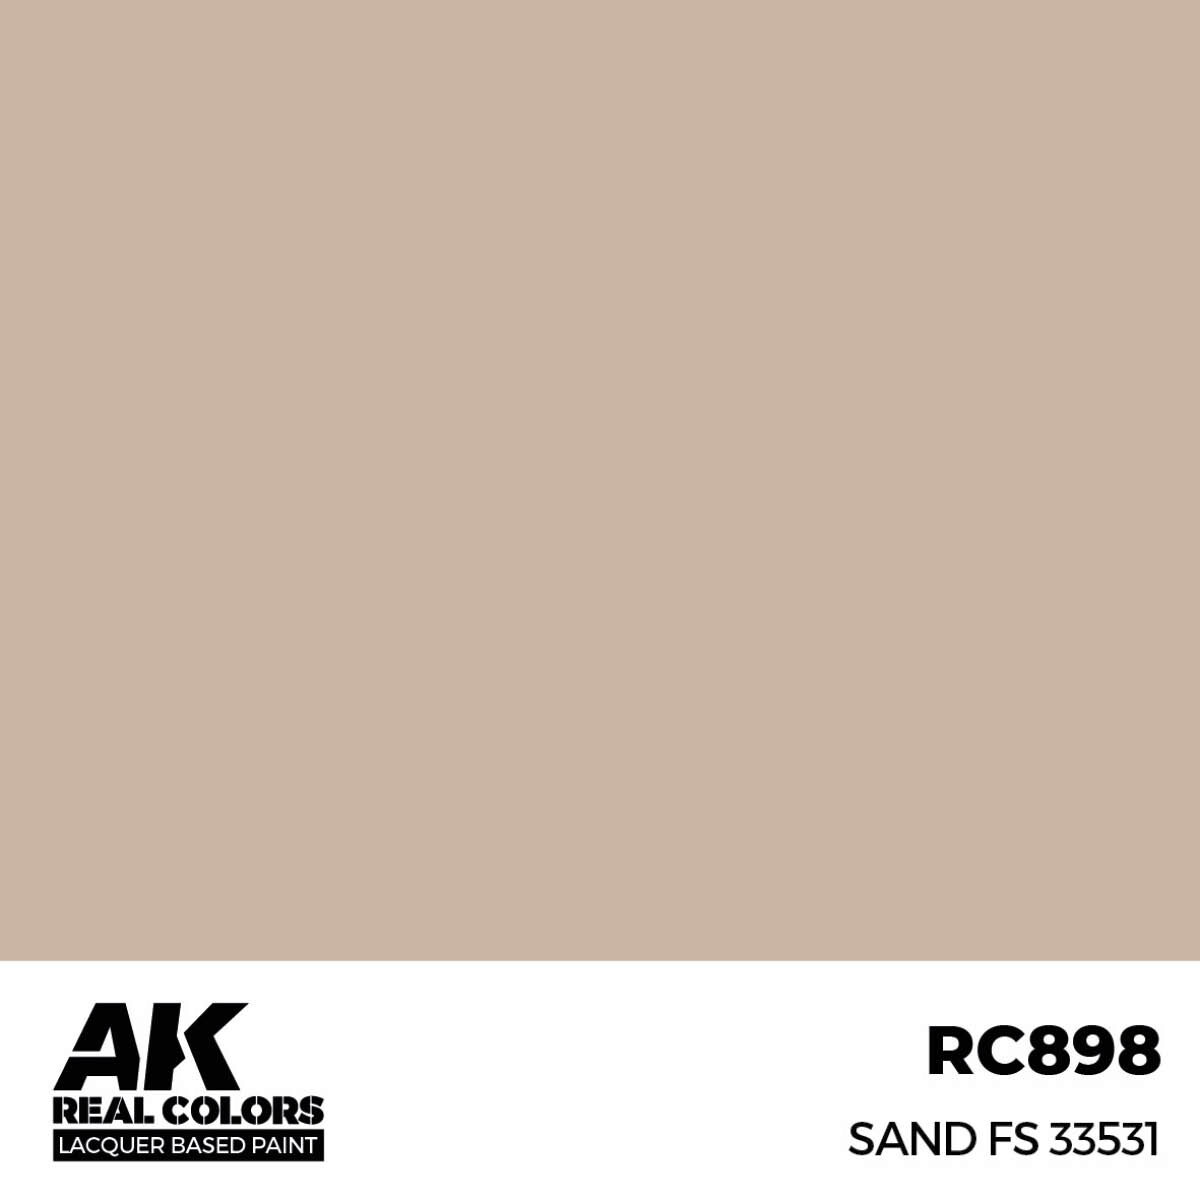 AK RC898 Real Colors Sand FS 33531 17 ml.